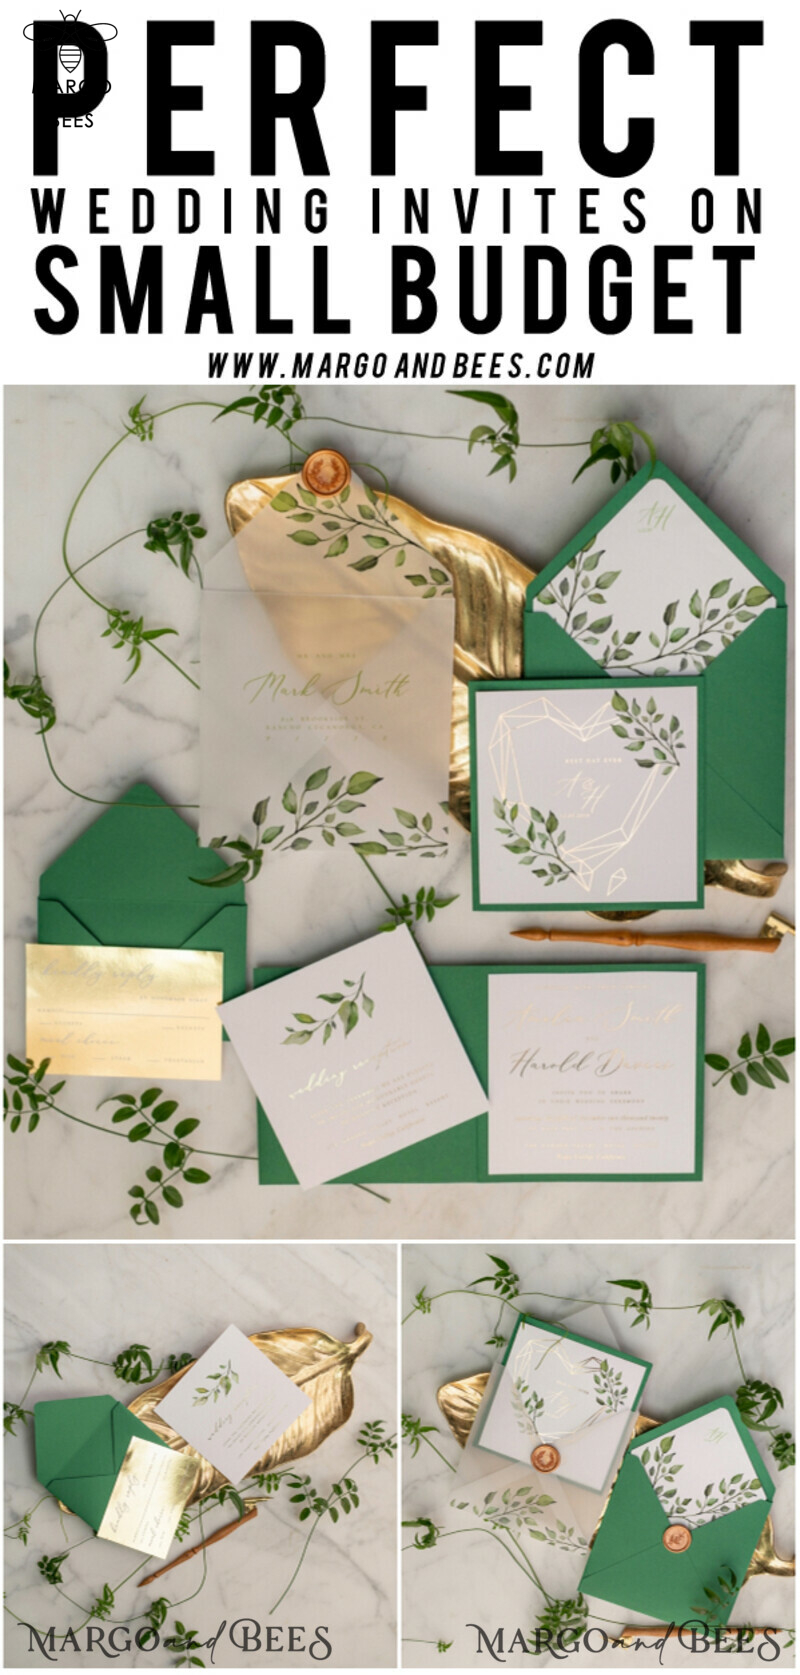 Luxury Gold Foil Wedding Invitations: Glamour Greenery meets Elegant Pocketfold and Geometric Vellum in this Wedding Invitation Suite-8